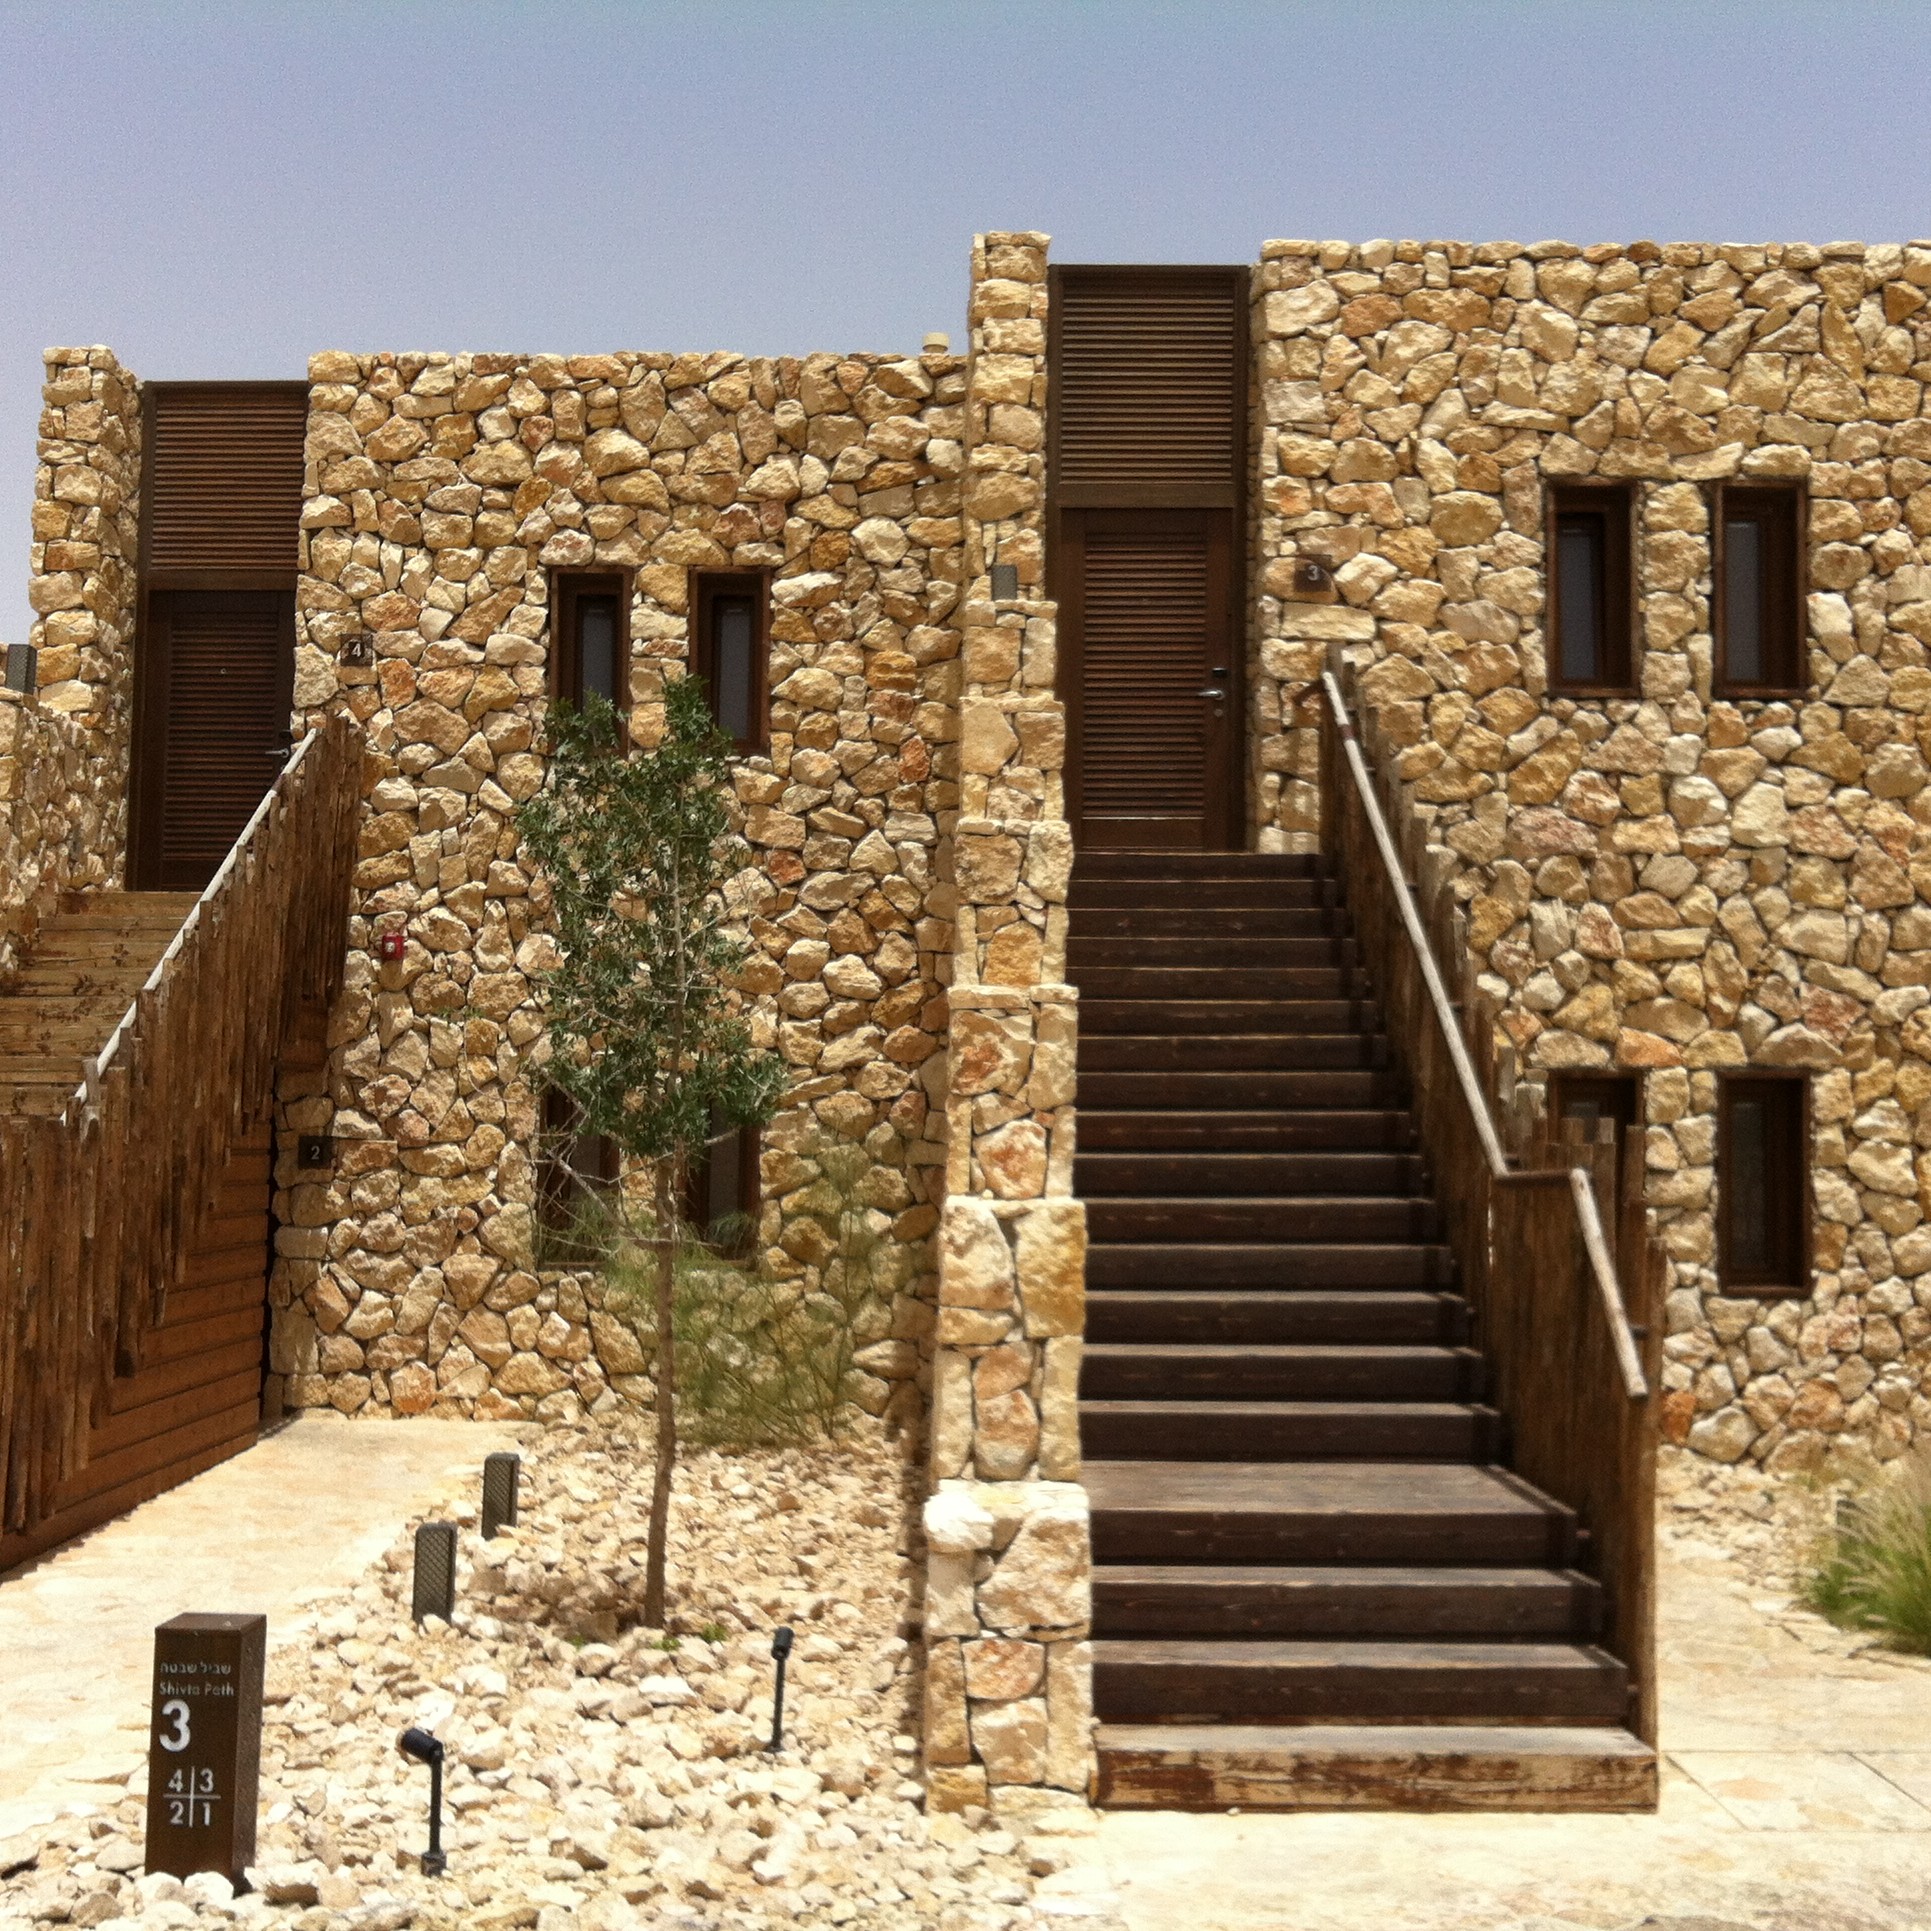 Beresheet Exclusive Hotel. Mitzpeh Ramon, Israel (2011)